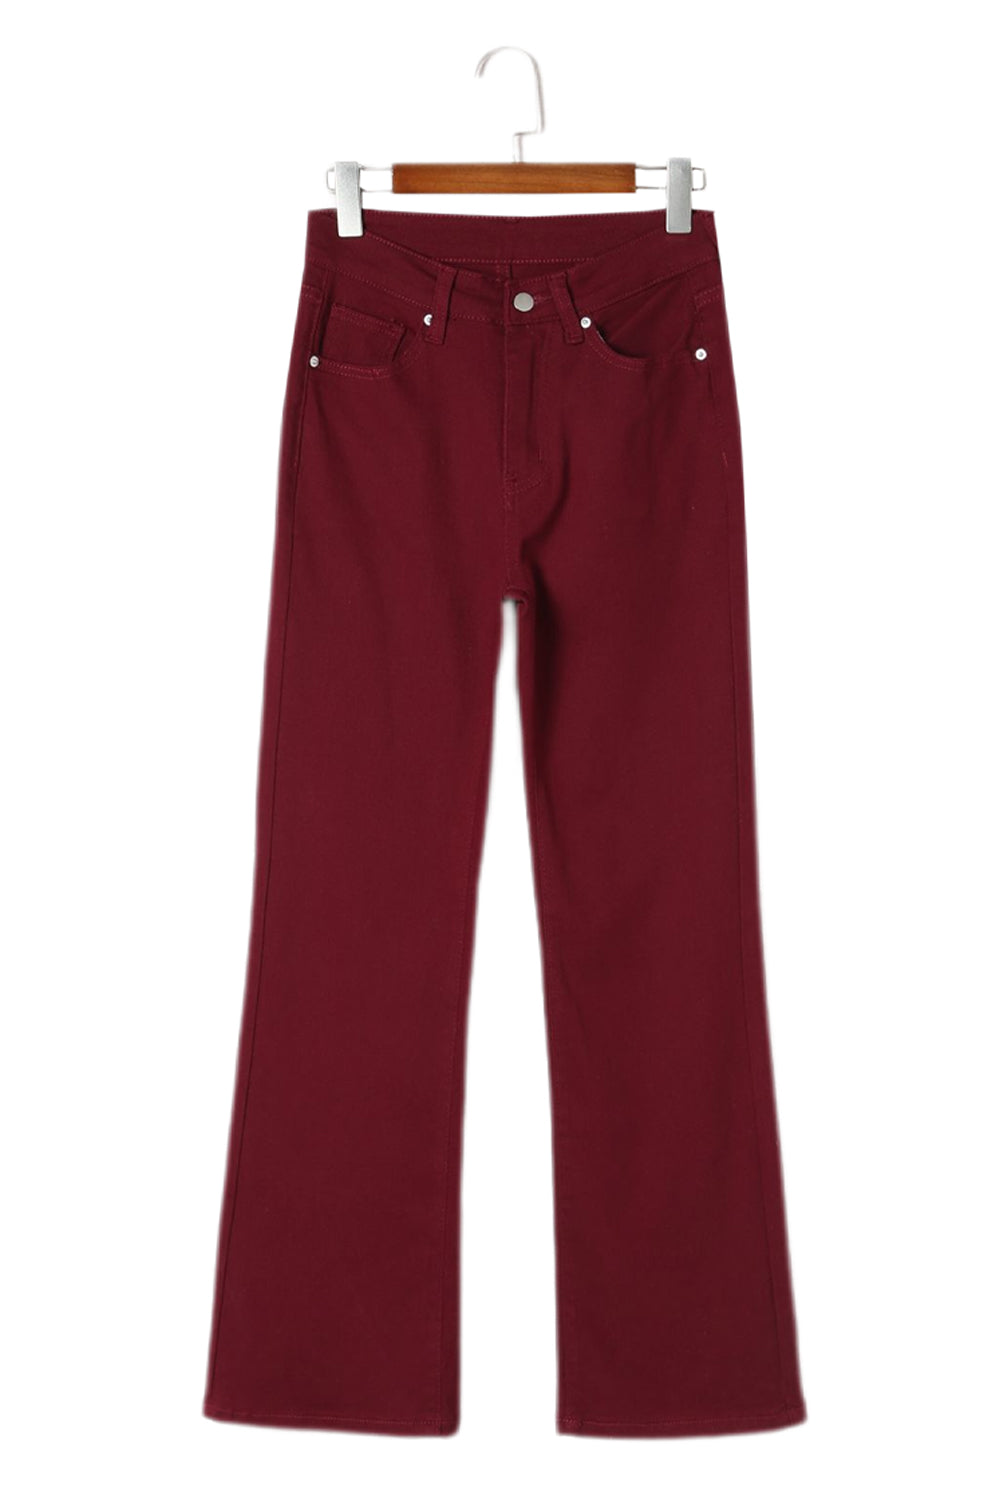 Burgundy High Waist Flare Jeans with Pockets